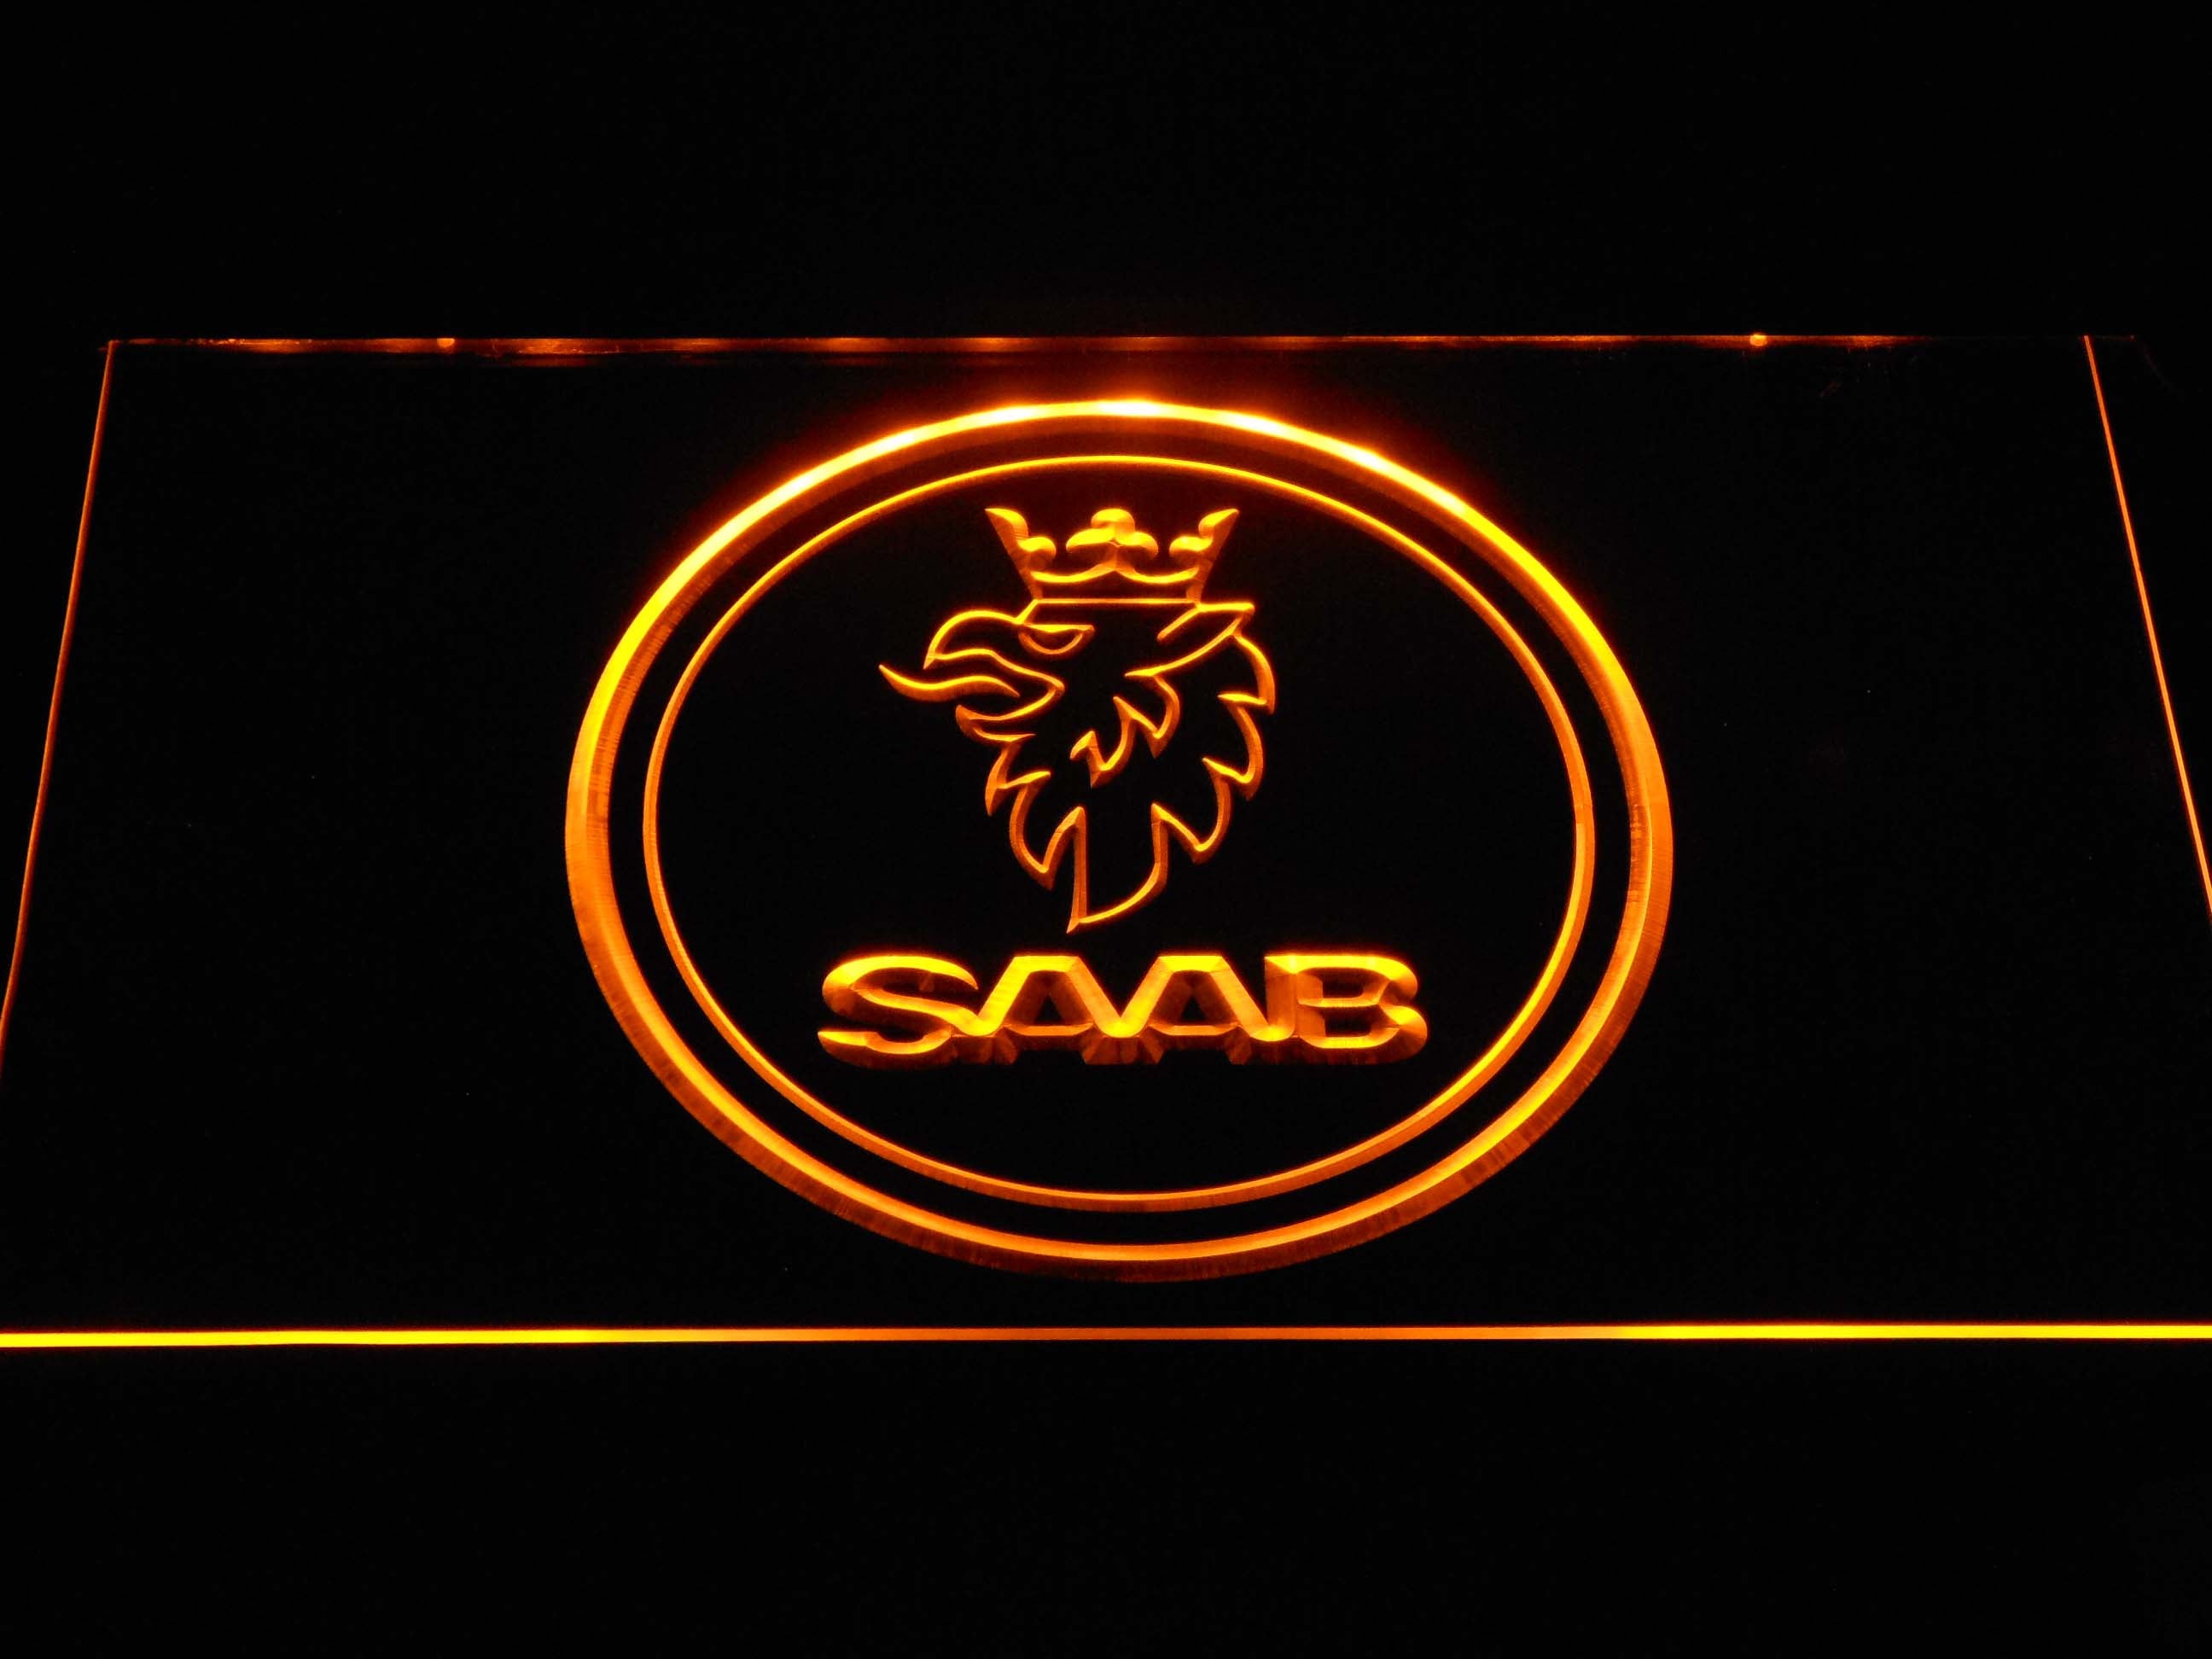 Saab Emblem Neon Light LED Sign